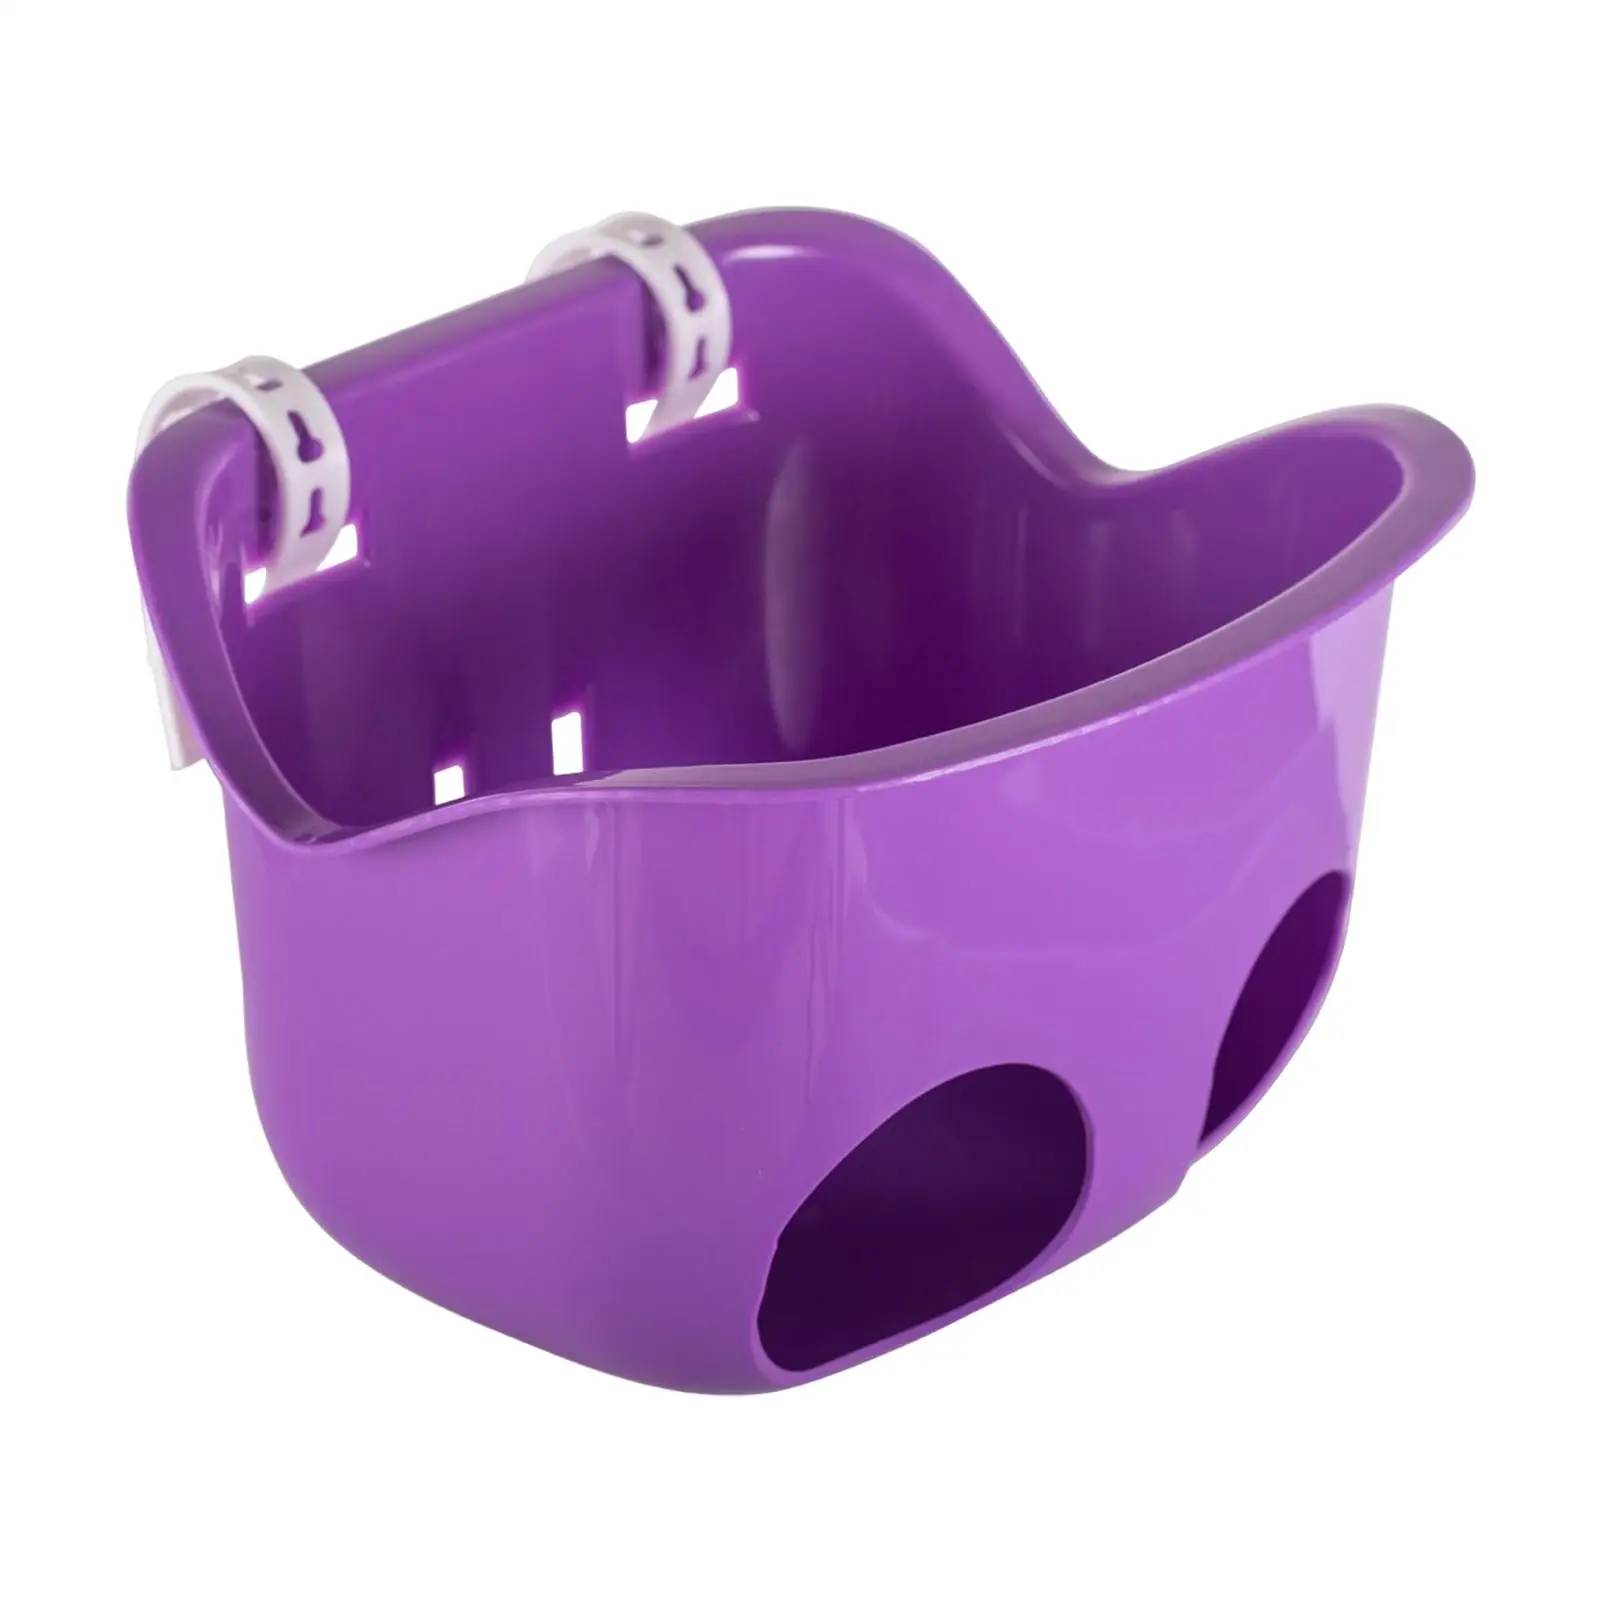 Portable Kids Basket doll Seat Detachable Adjustable for